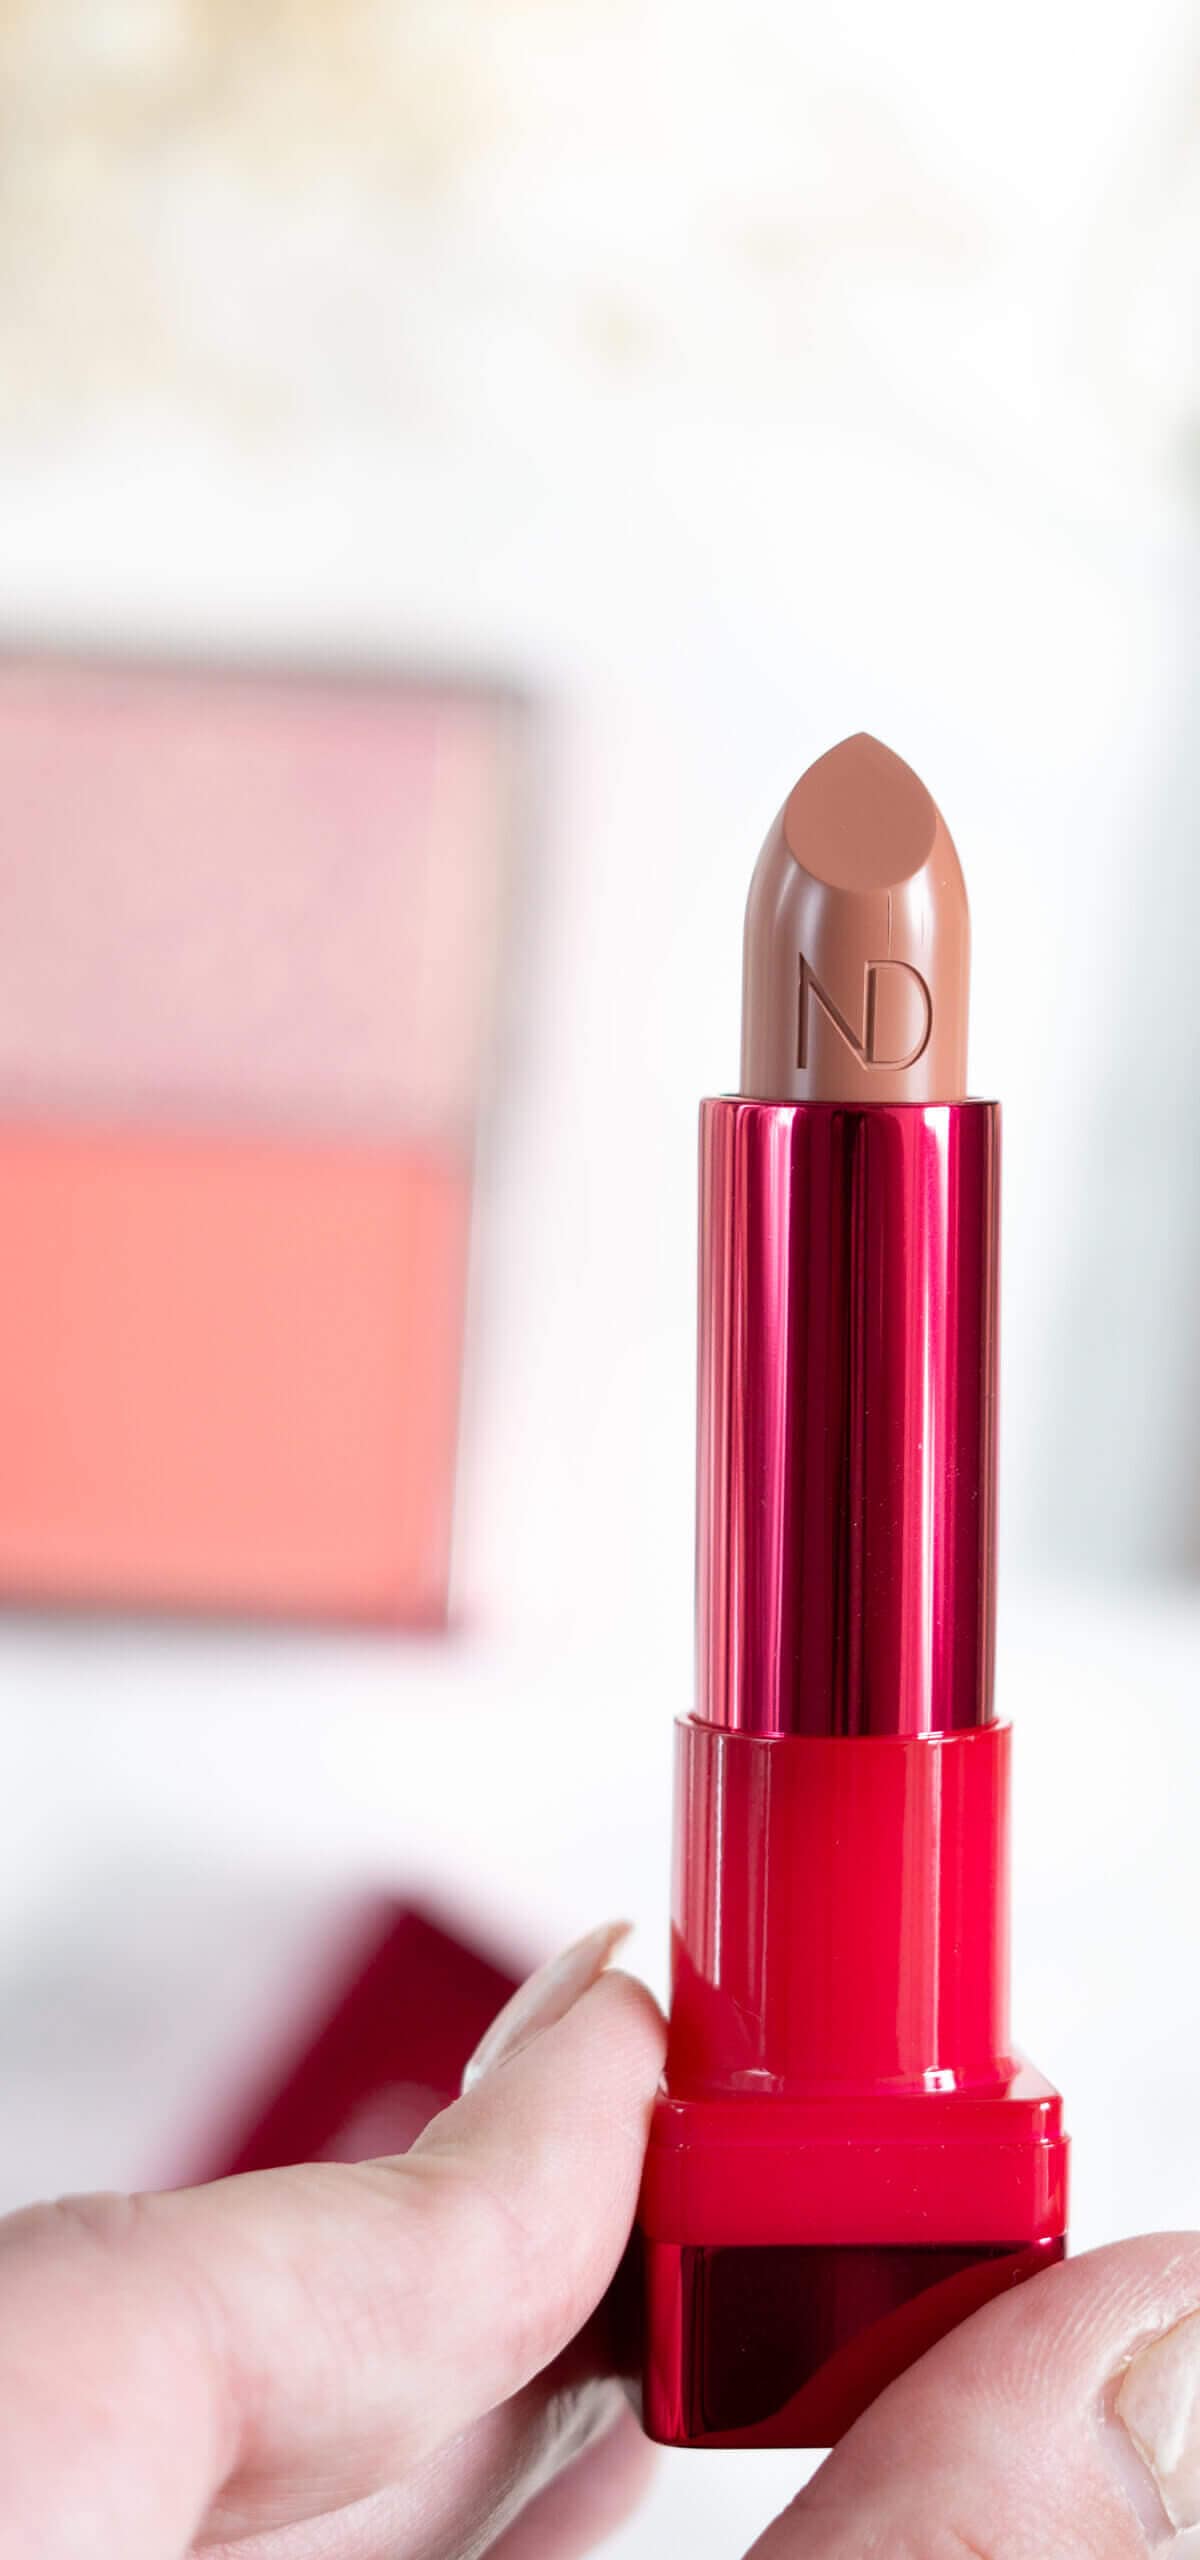 Natasha Denona Love Cheek Duo & Amorosa Lipstick Review ⋆ Beautymone